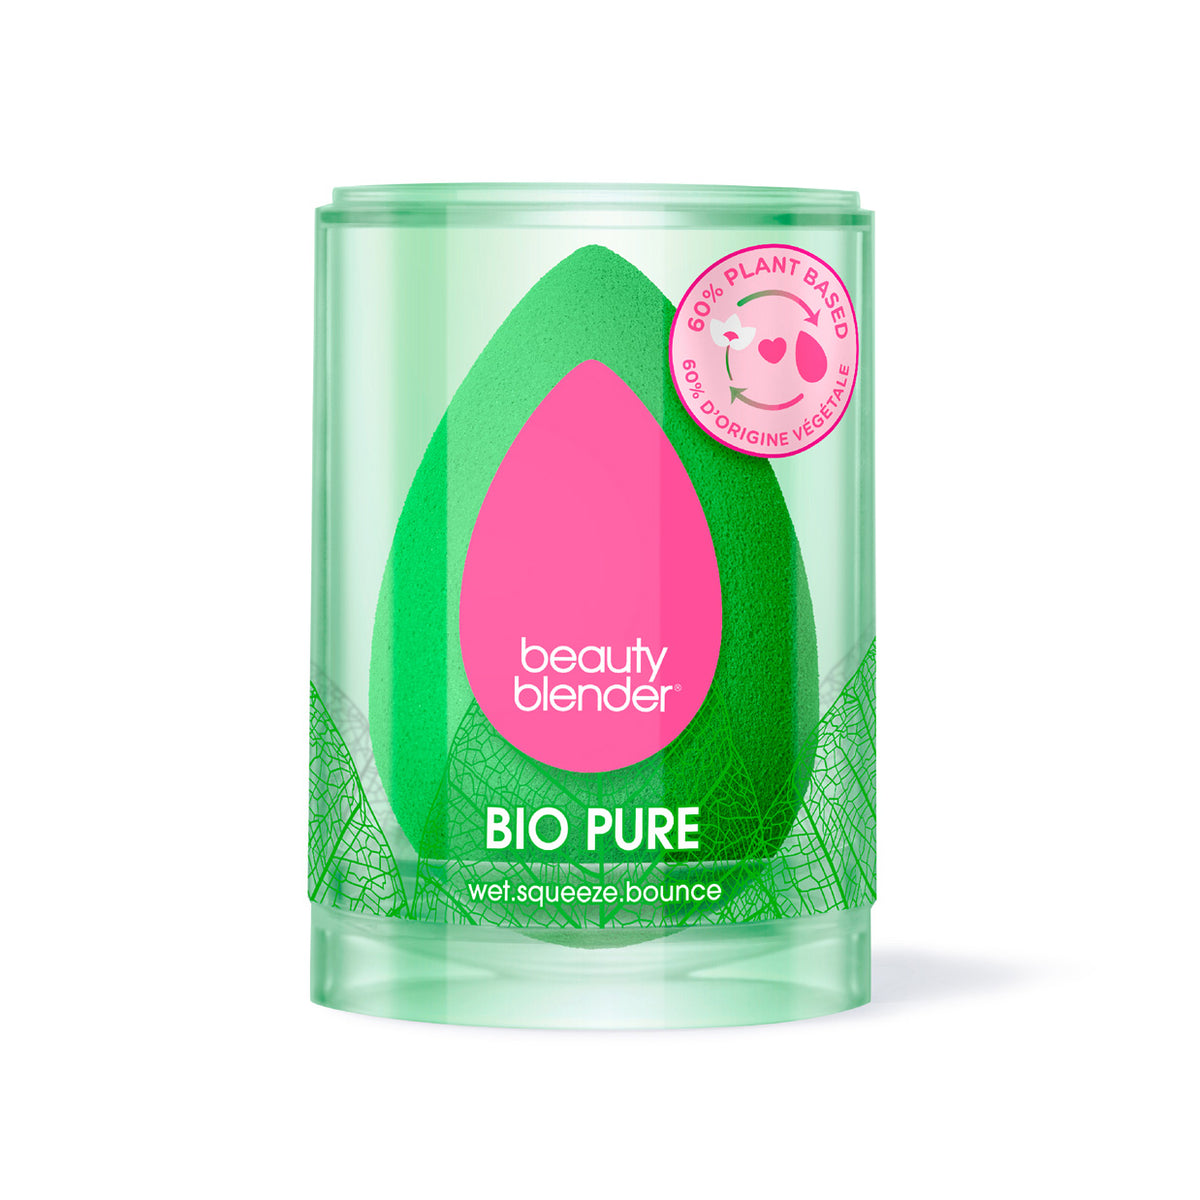 Beautyblender® Bio Pure Sustainable Makeup Sponge.